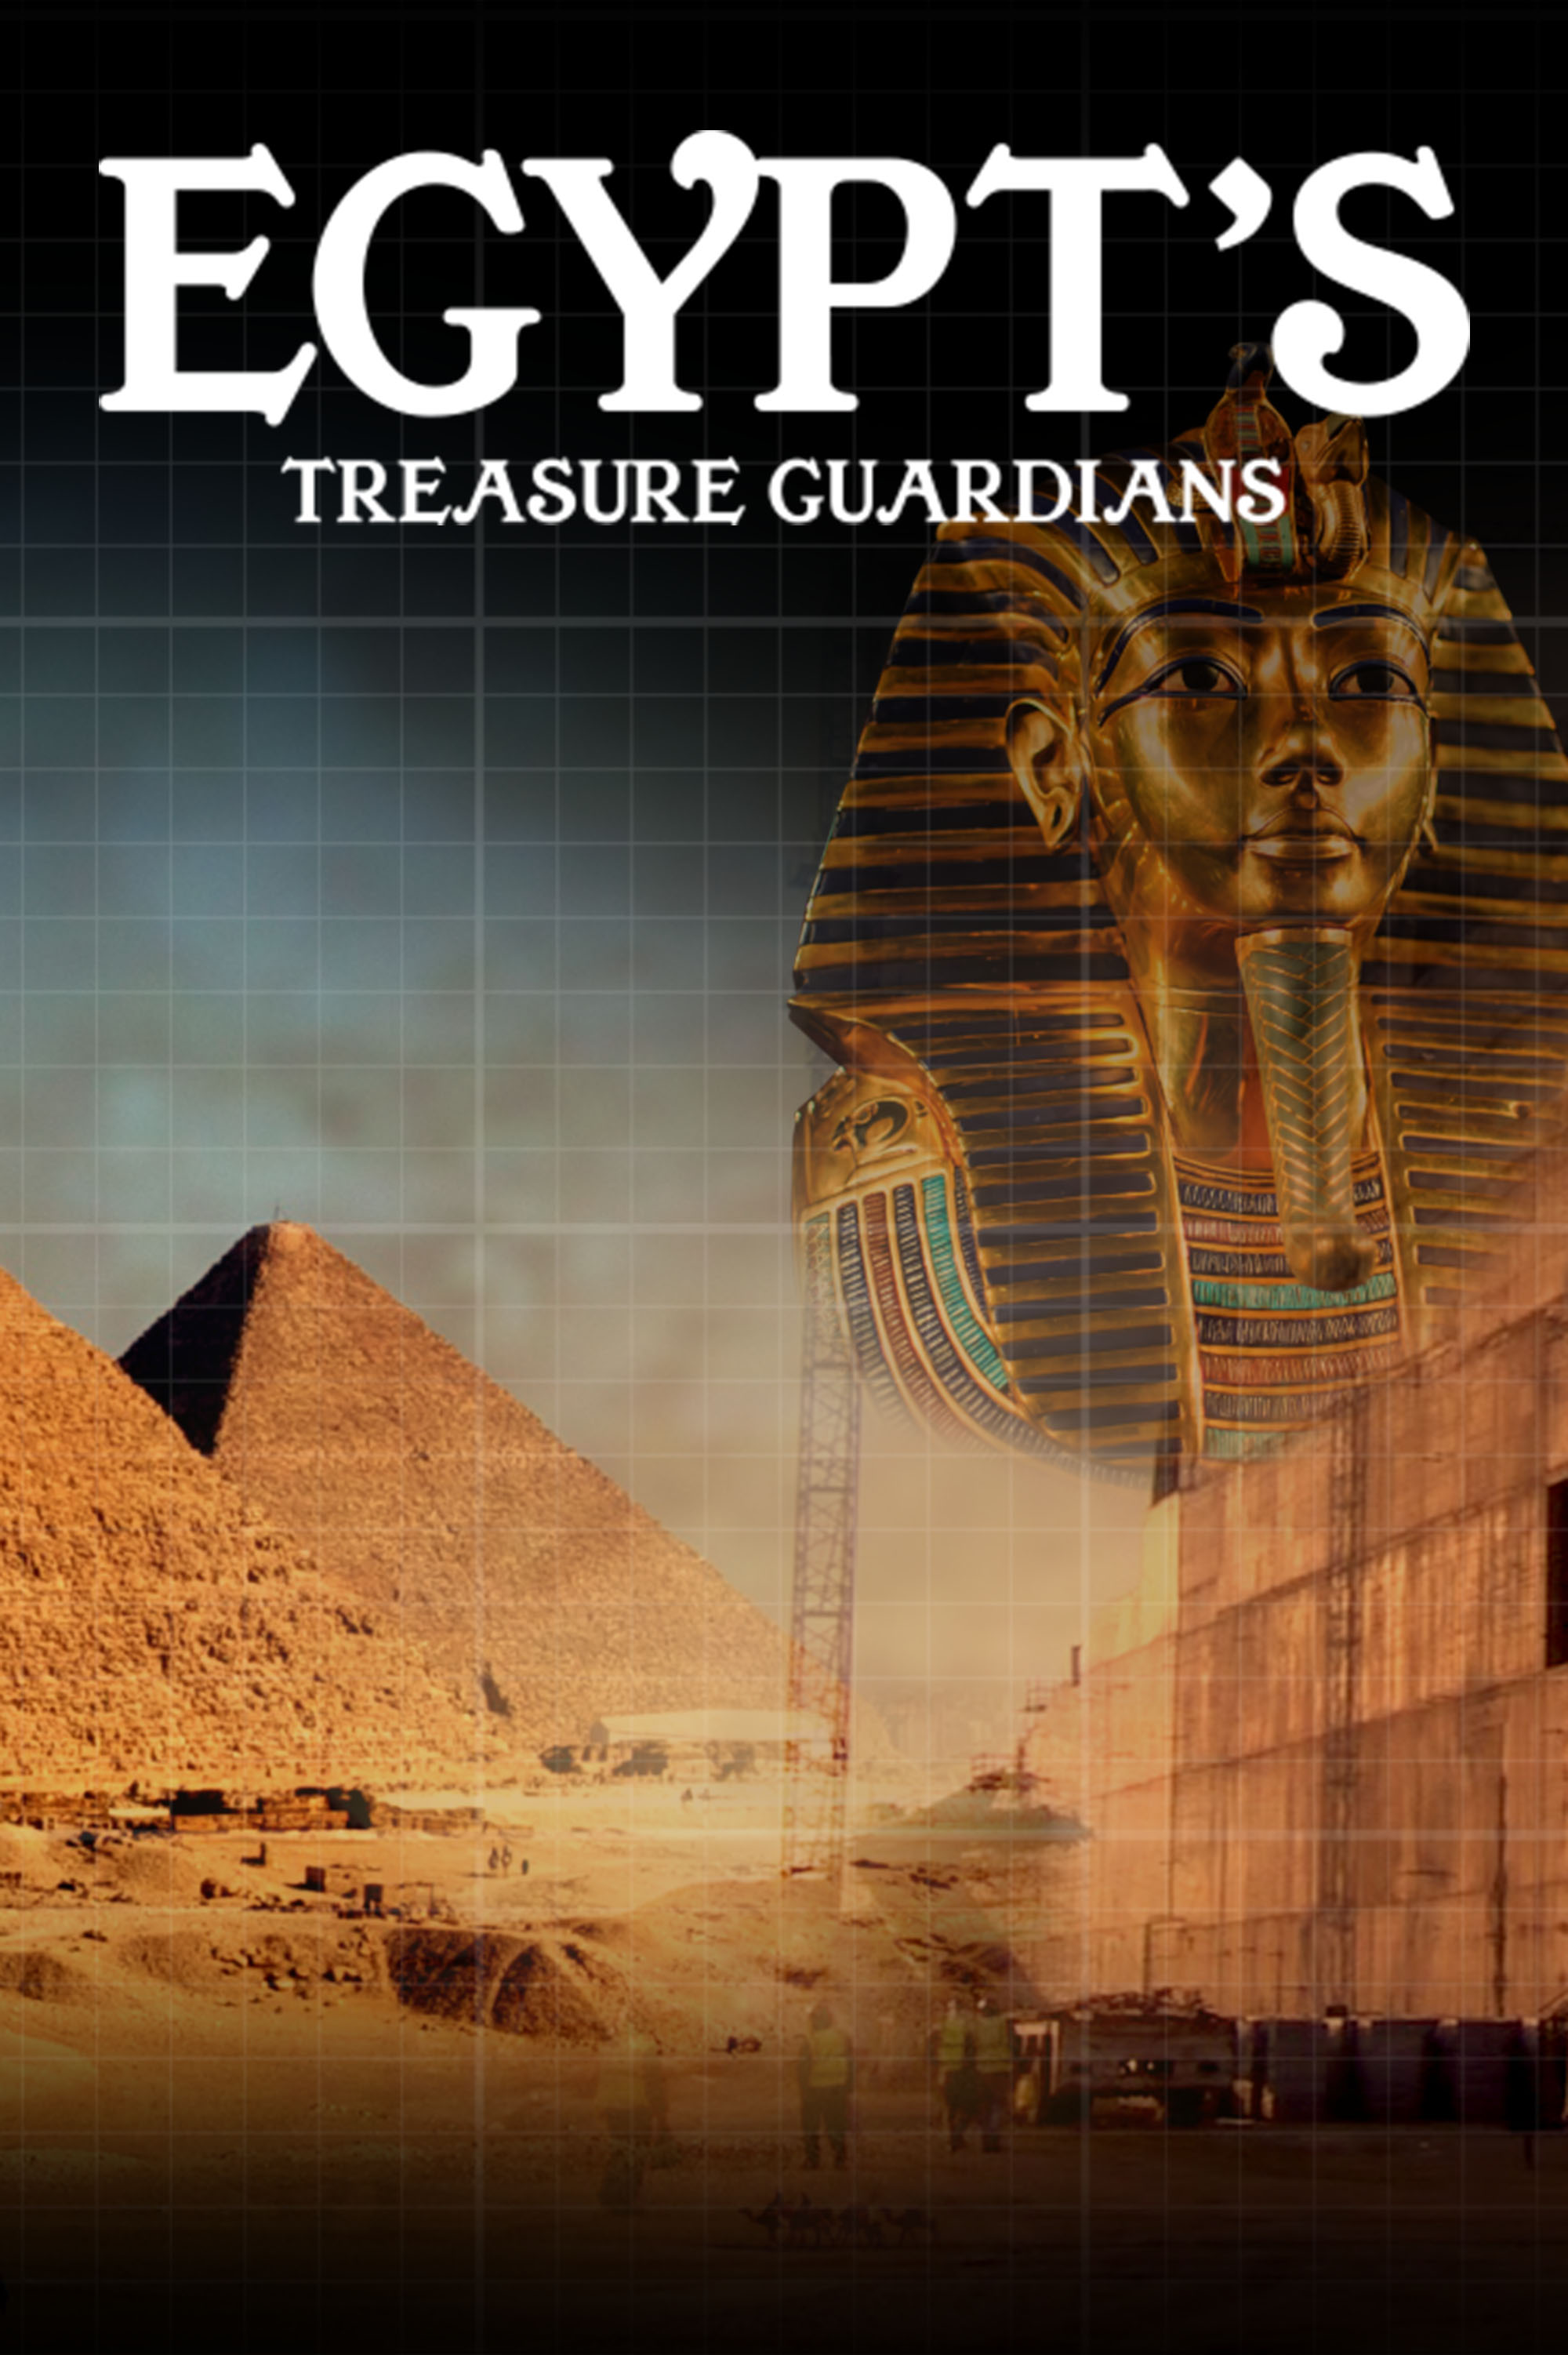     Egipt - strażnicy skarbów